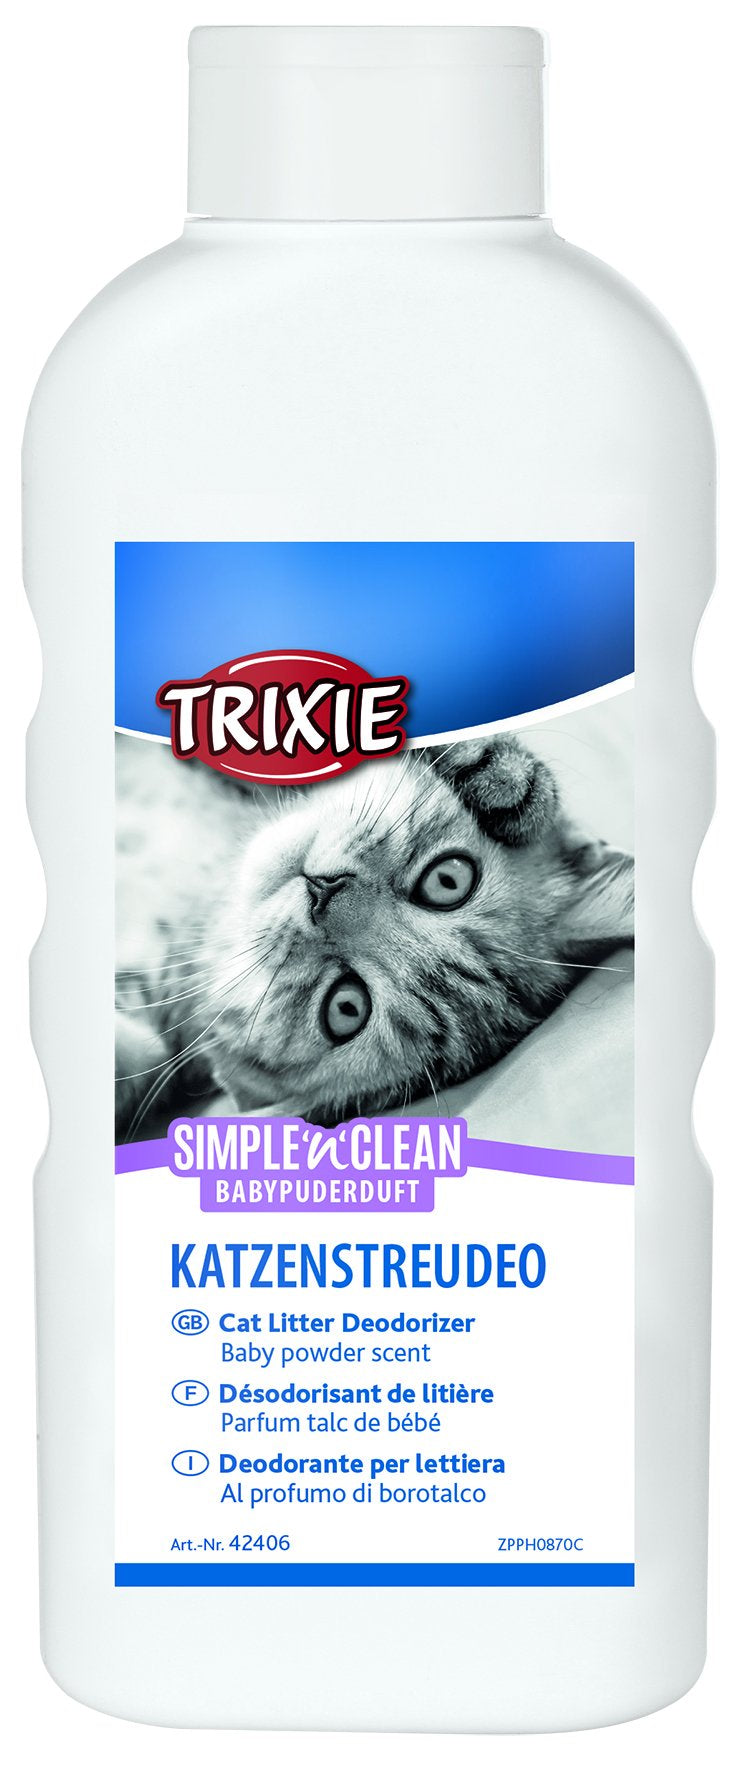 42406 Simple'n'Clean cat litter deodorizer, baby powder, 750 g